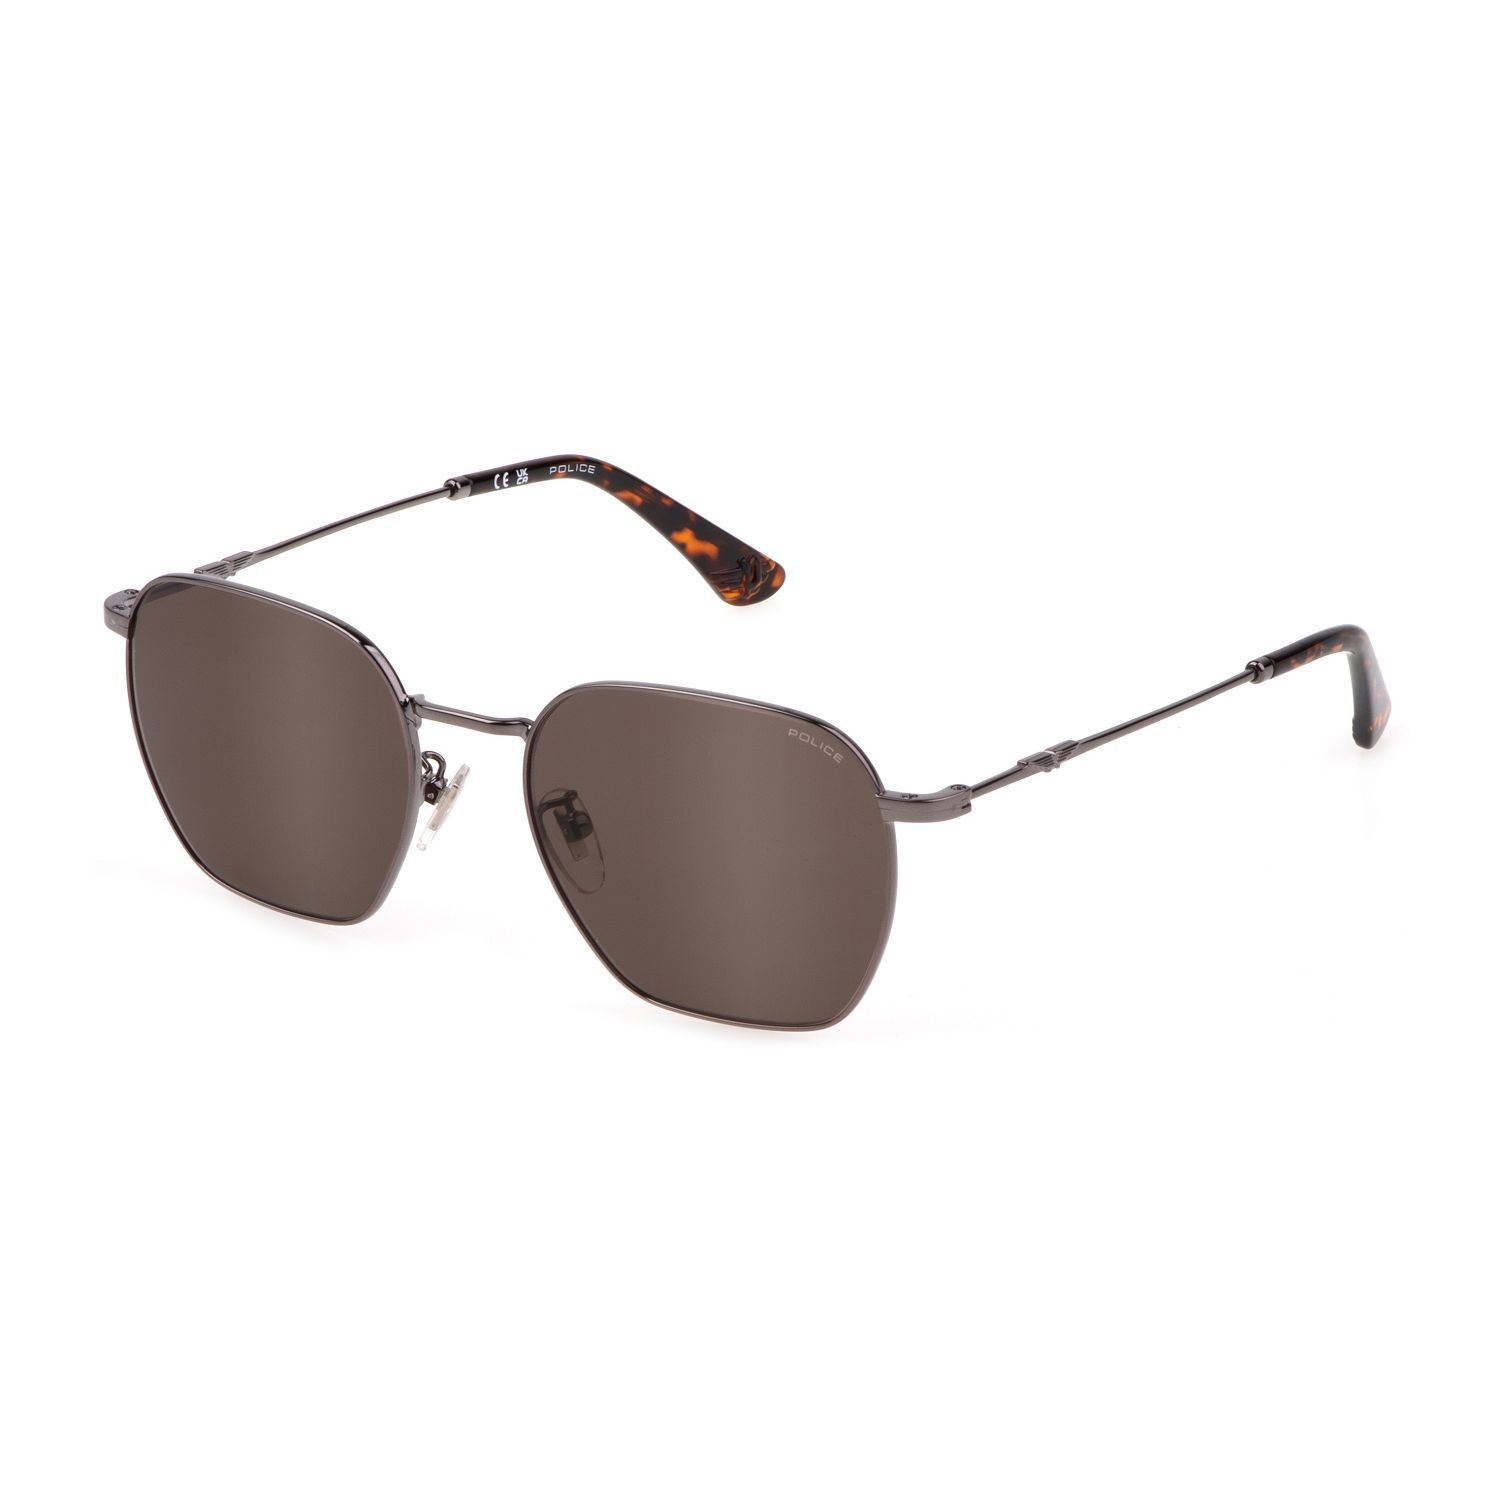 SPLL06M Square Sunglasses 568 - size 54